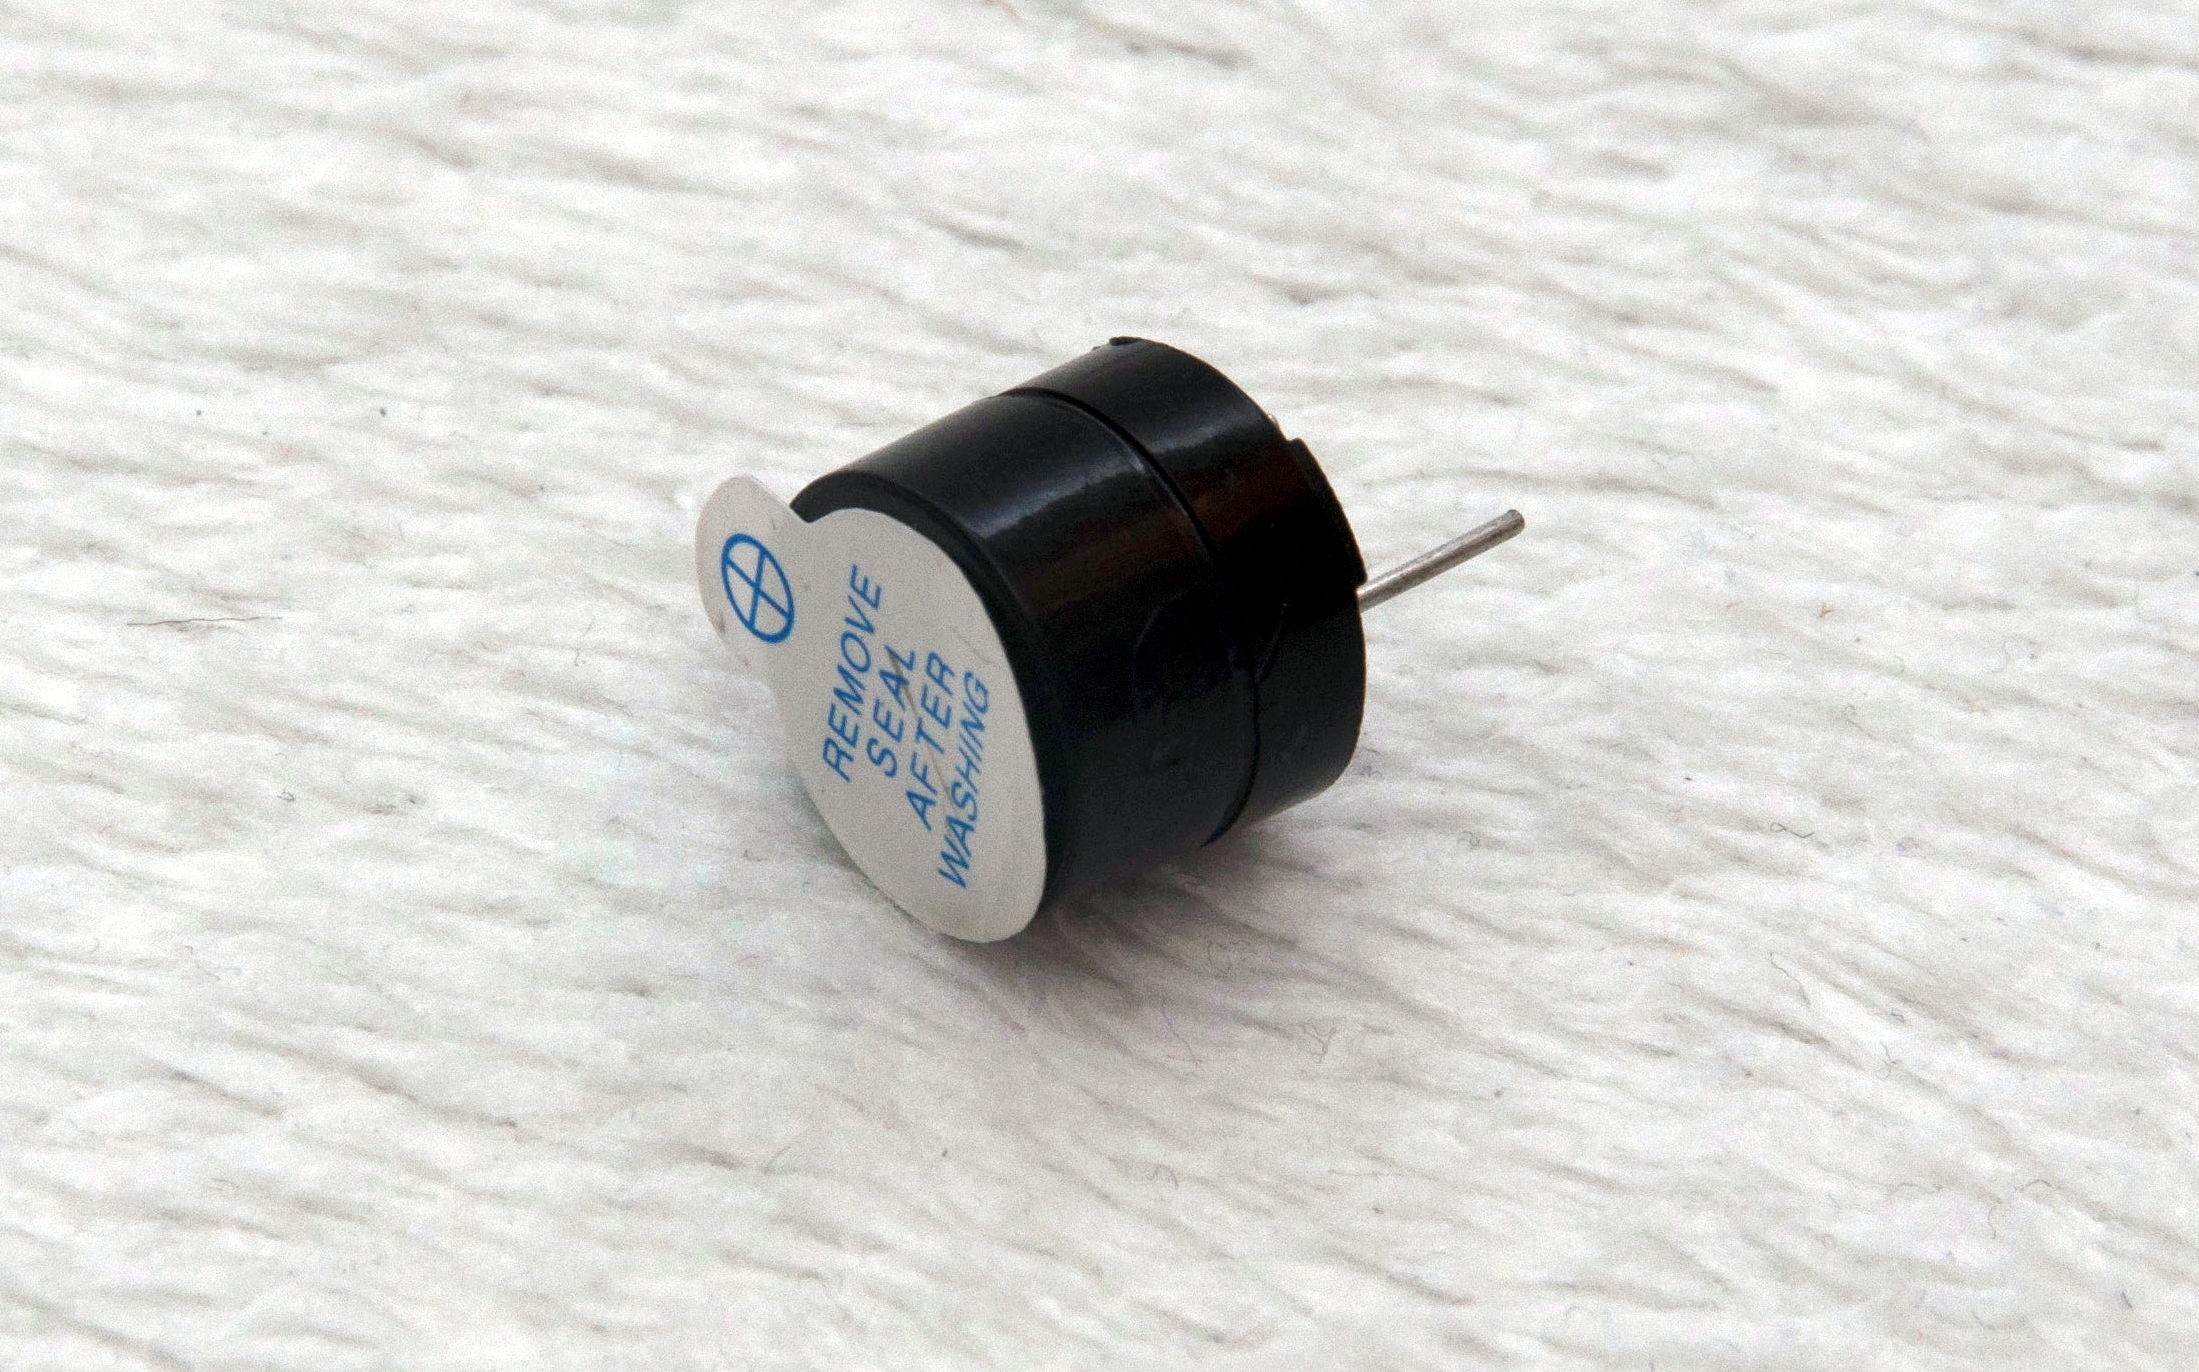 A standard 12 mm piezo buzzer